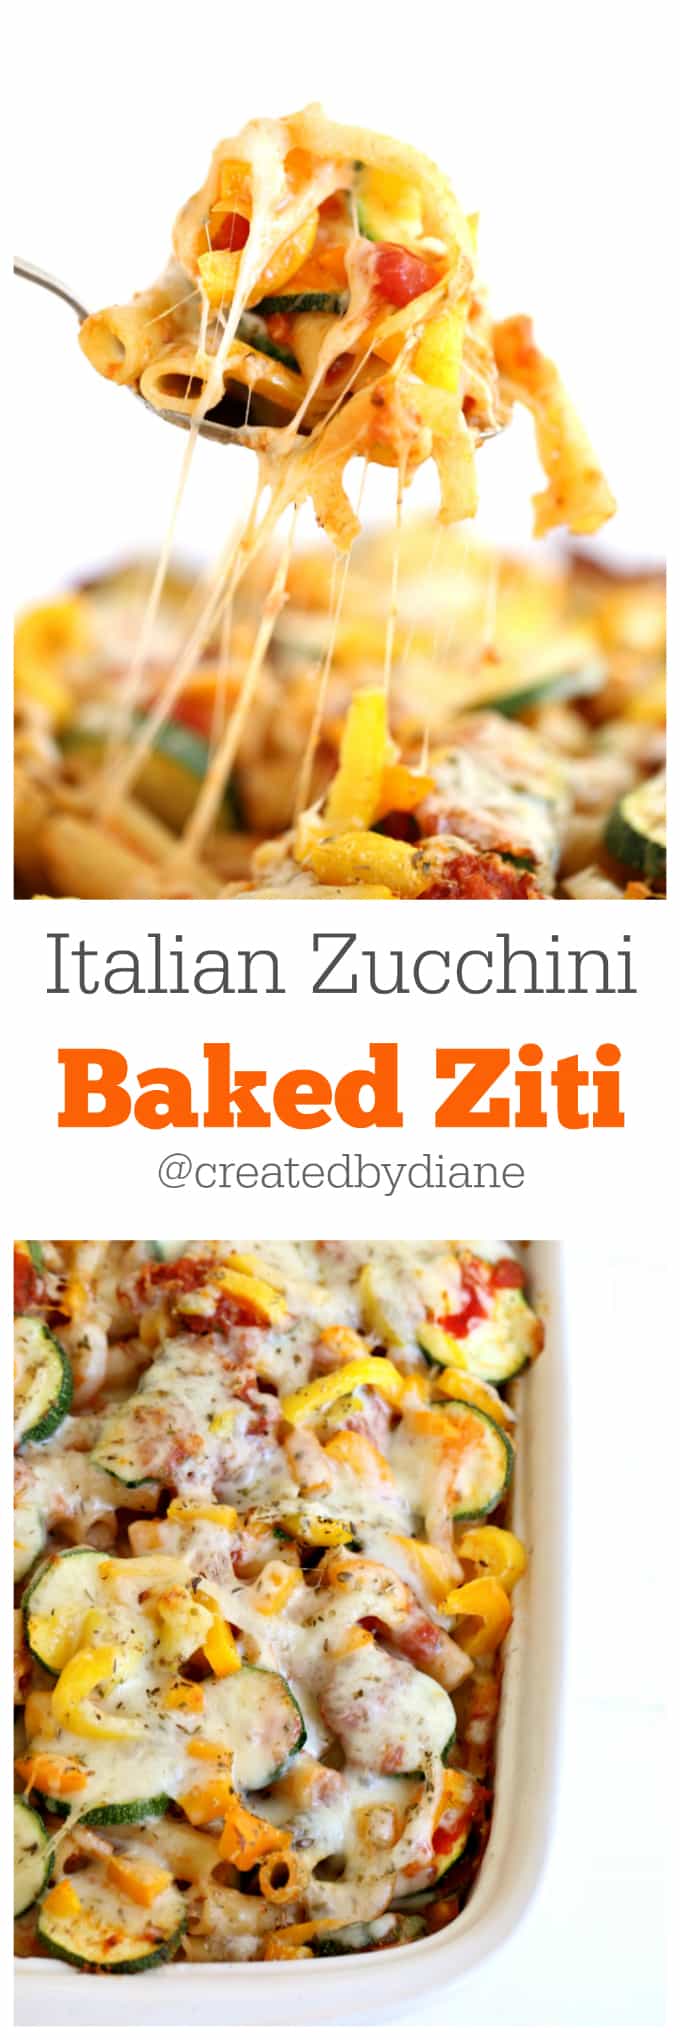 Italian Zucchini Baked Ziti recipe @createdbydiane